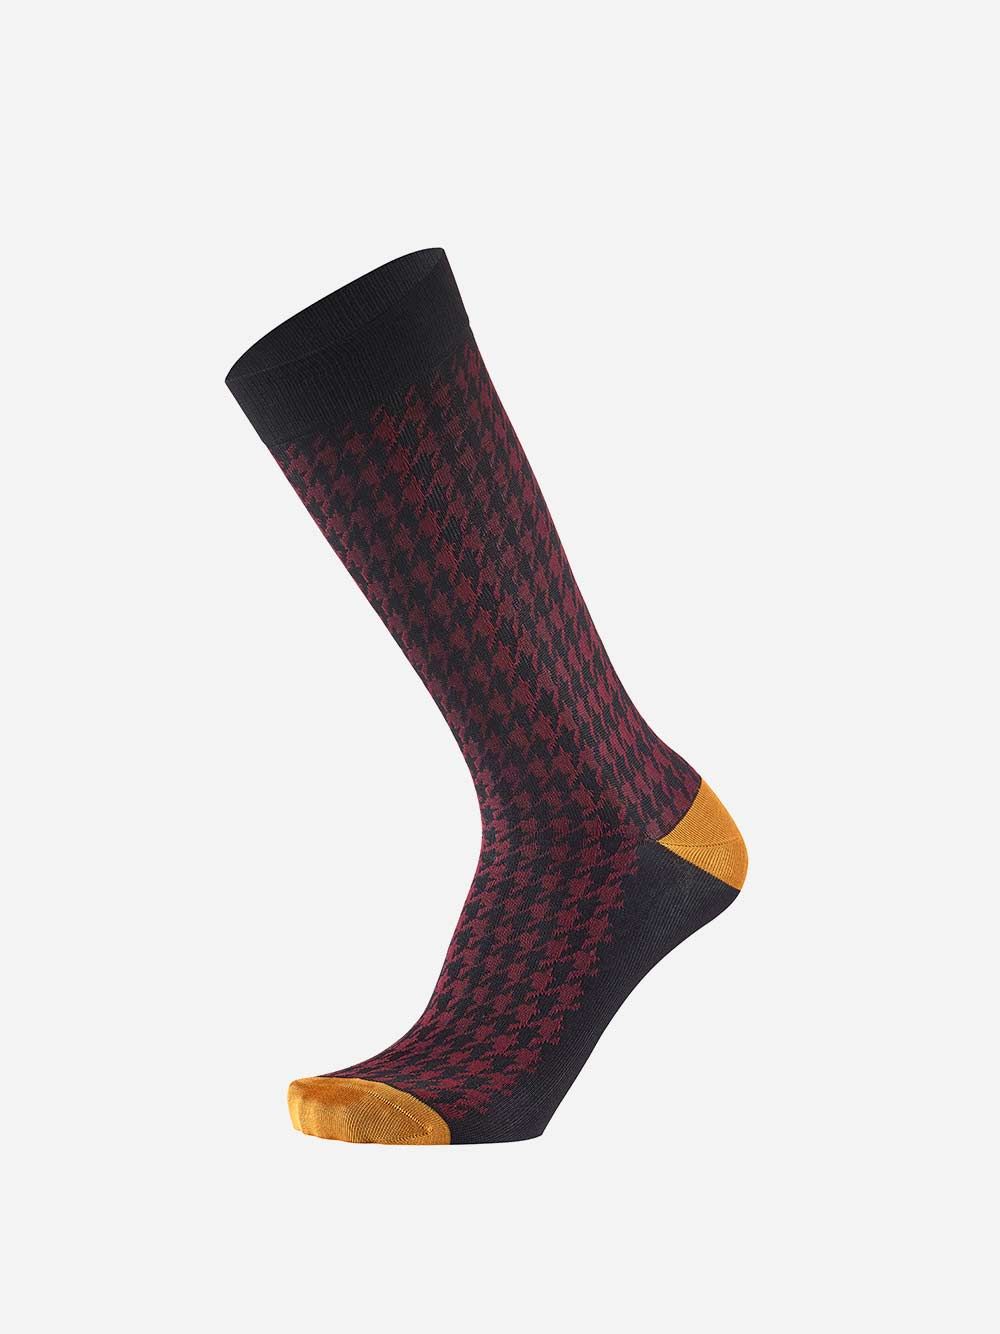 Pied Poule Burgundy Socks | Westmister